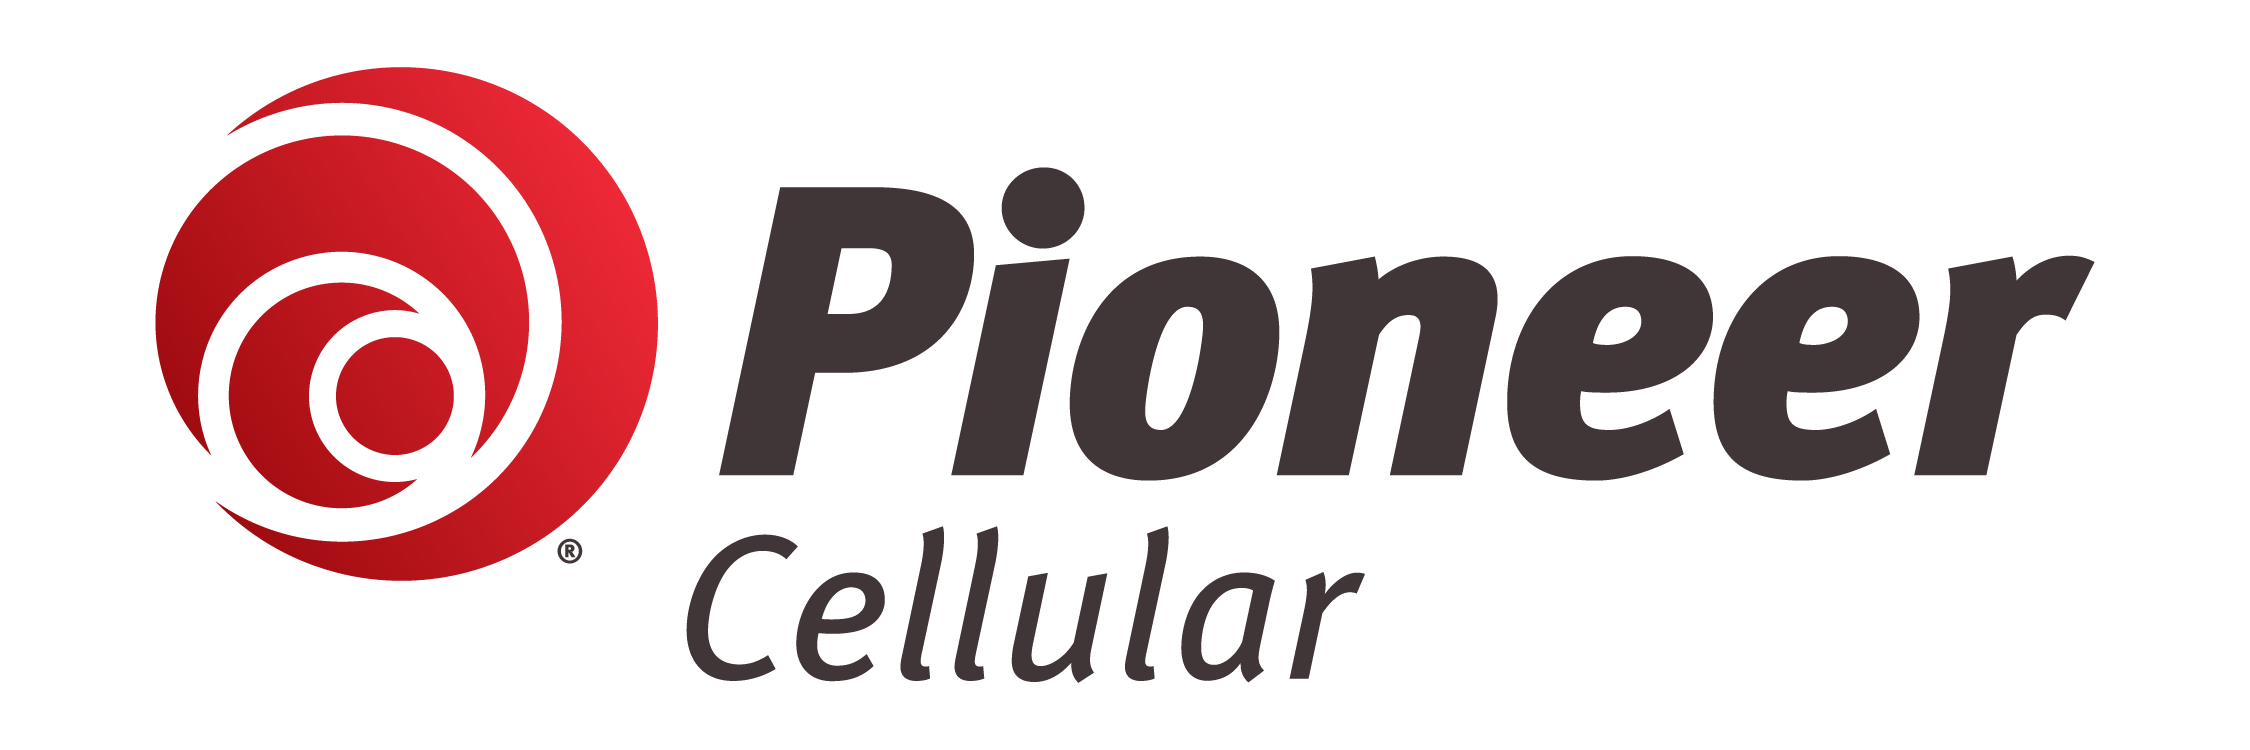 Pioneer Cellular logo